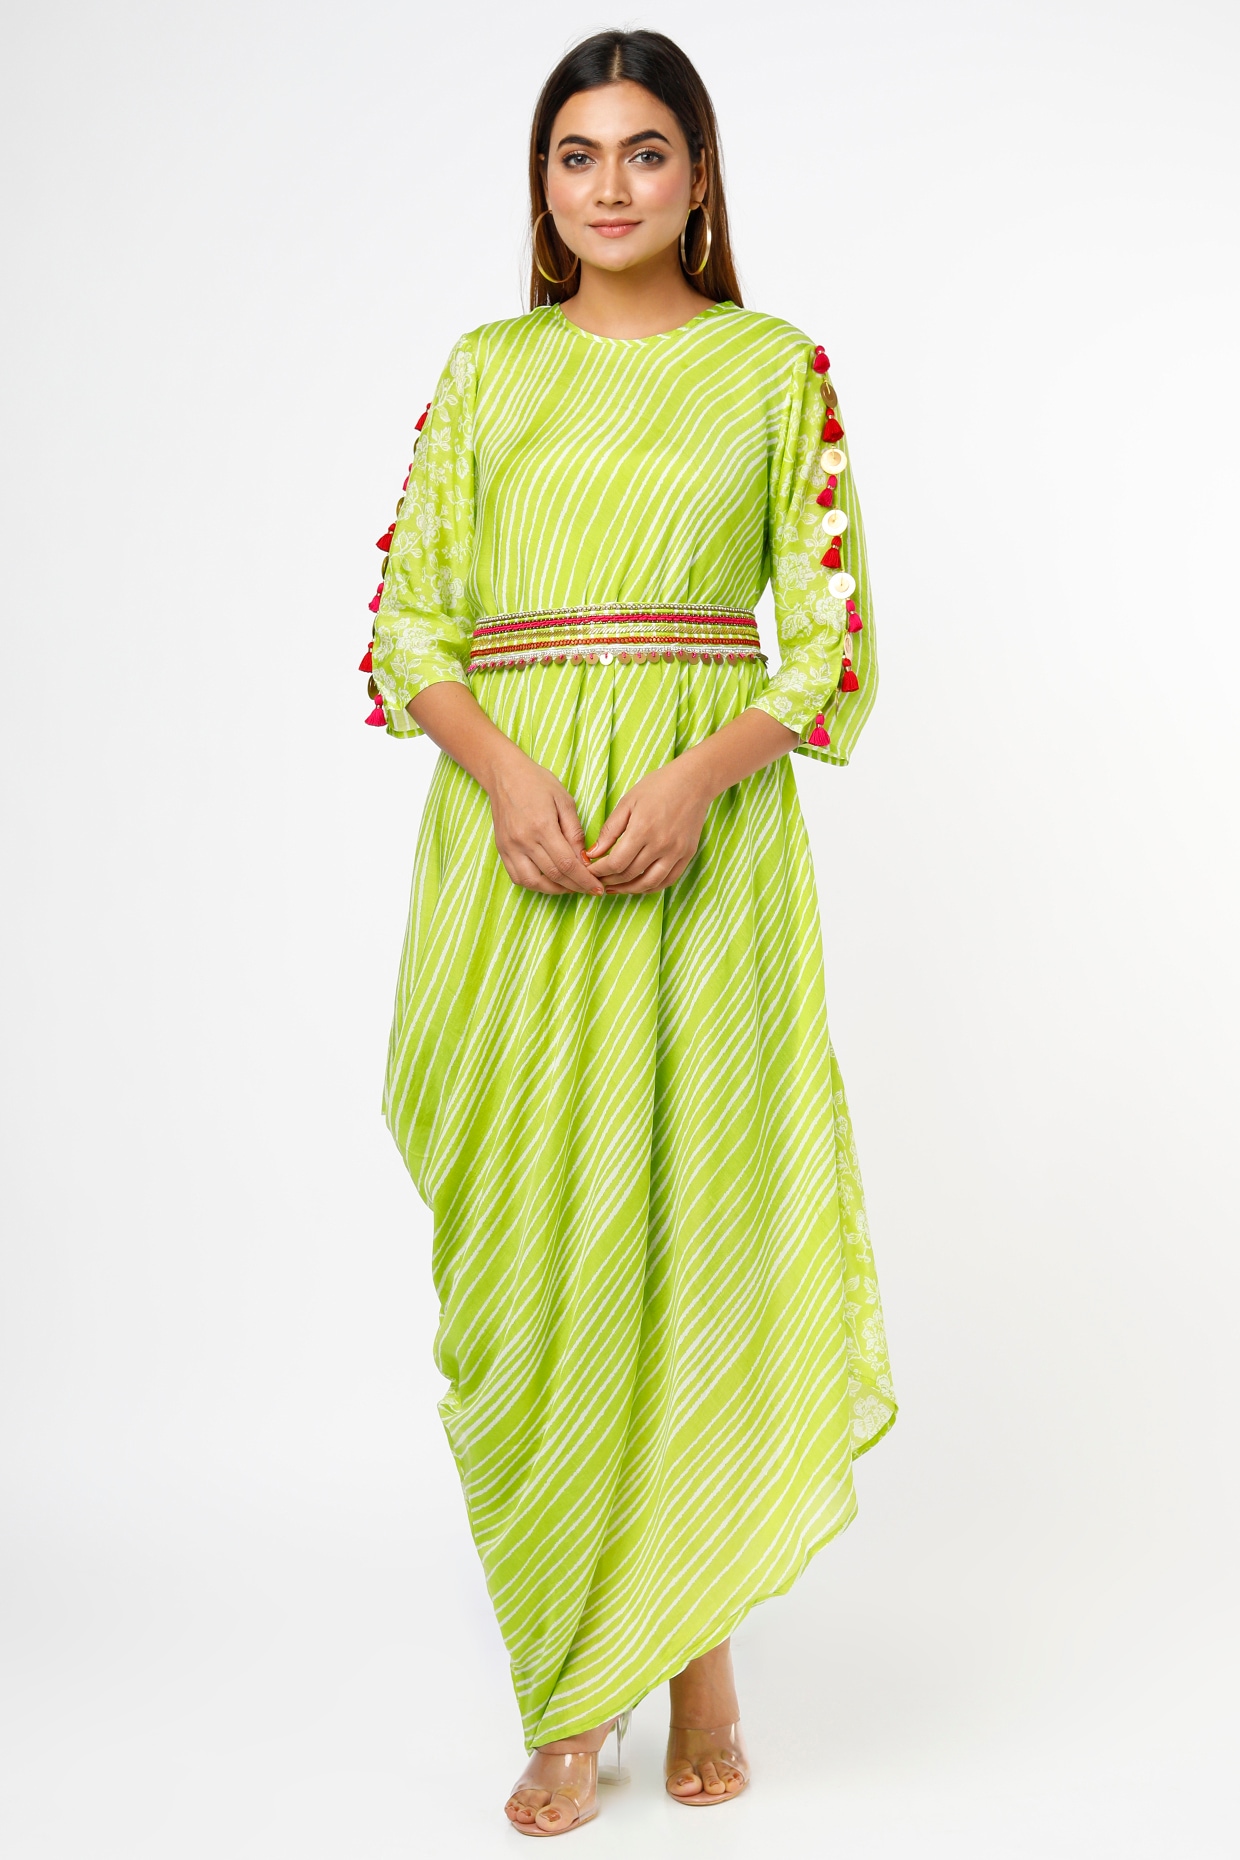 Vishu Special Kerala Traditional Dress Design ideas - YouTube